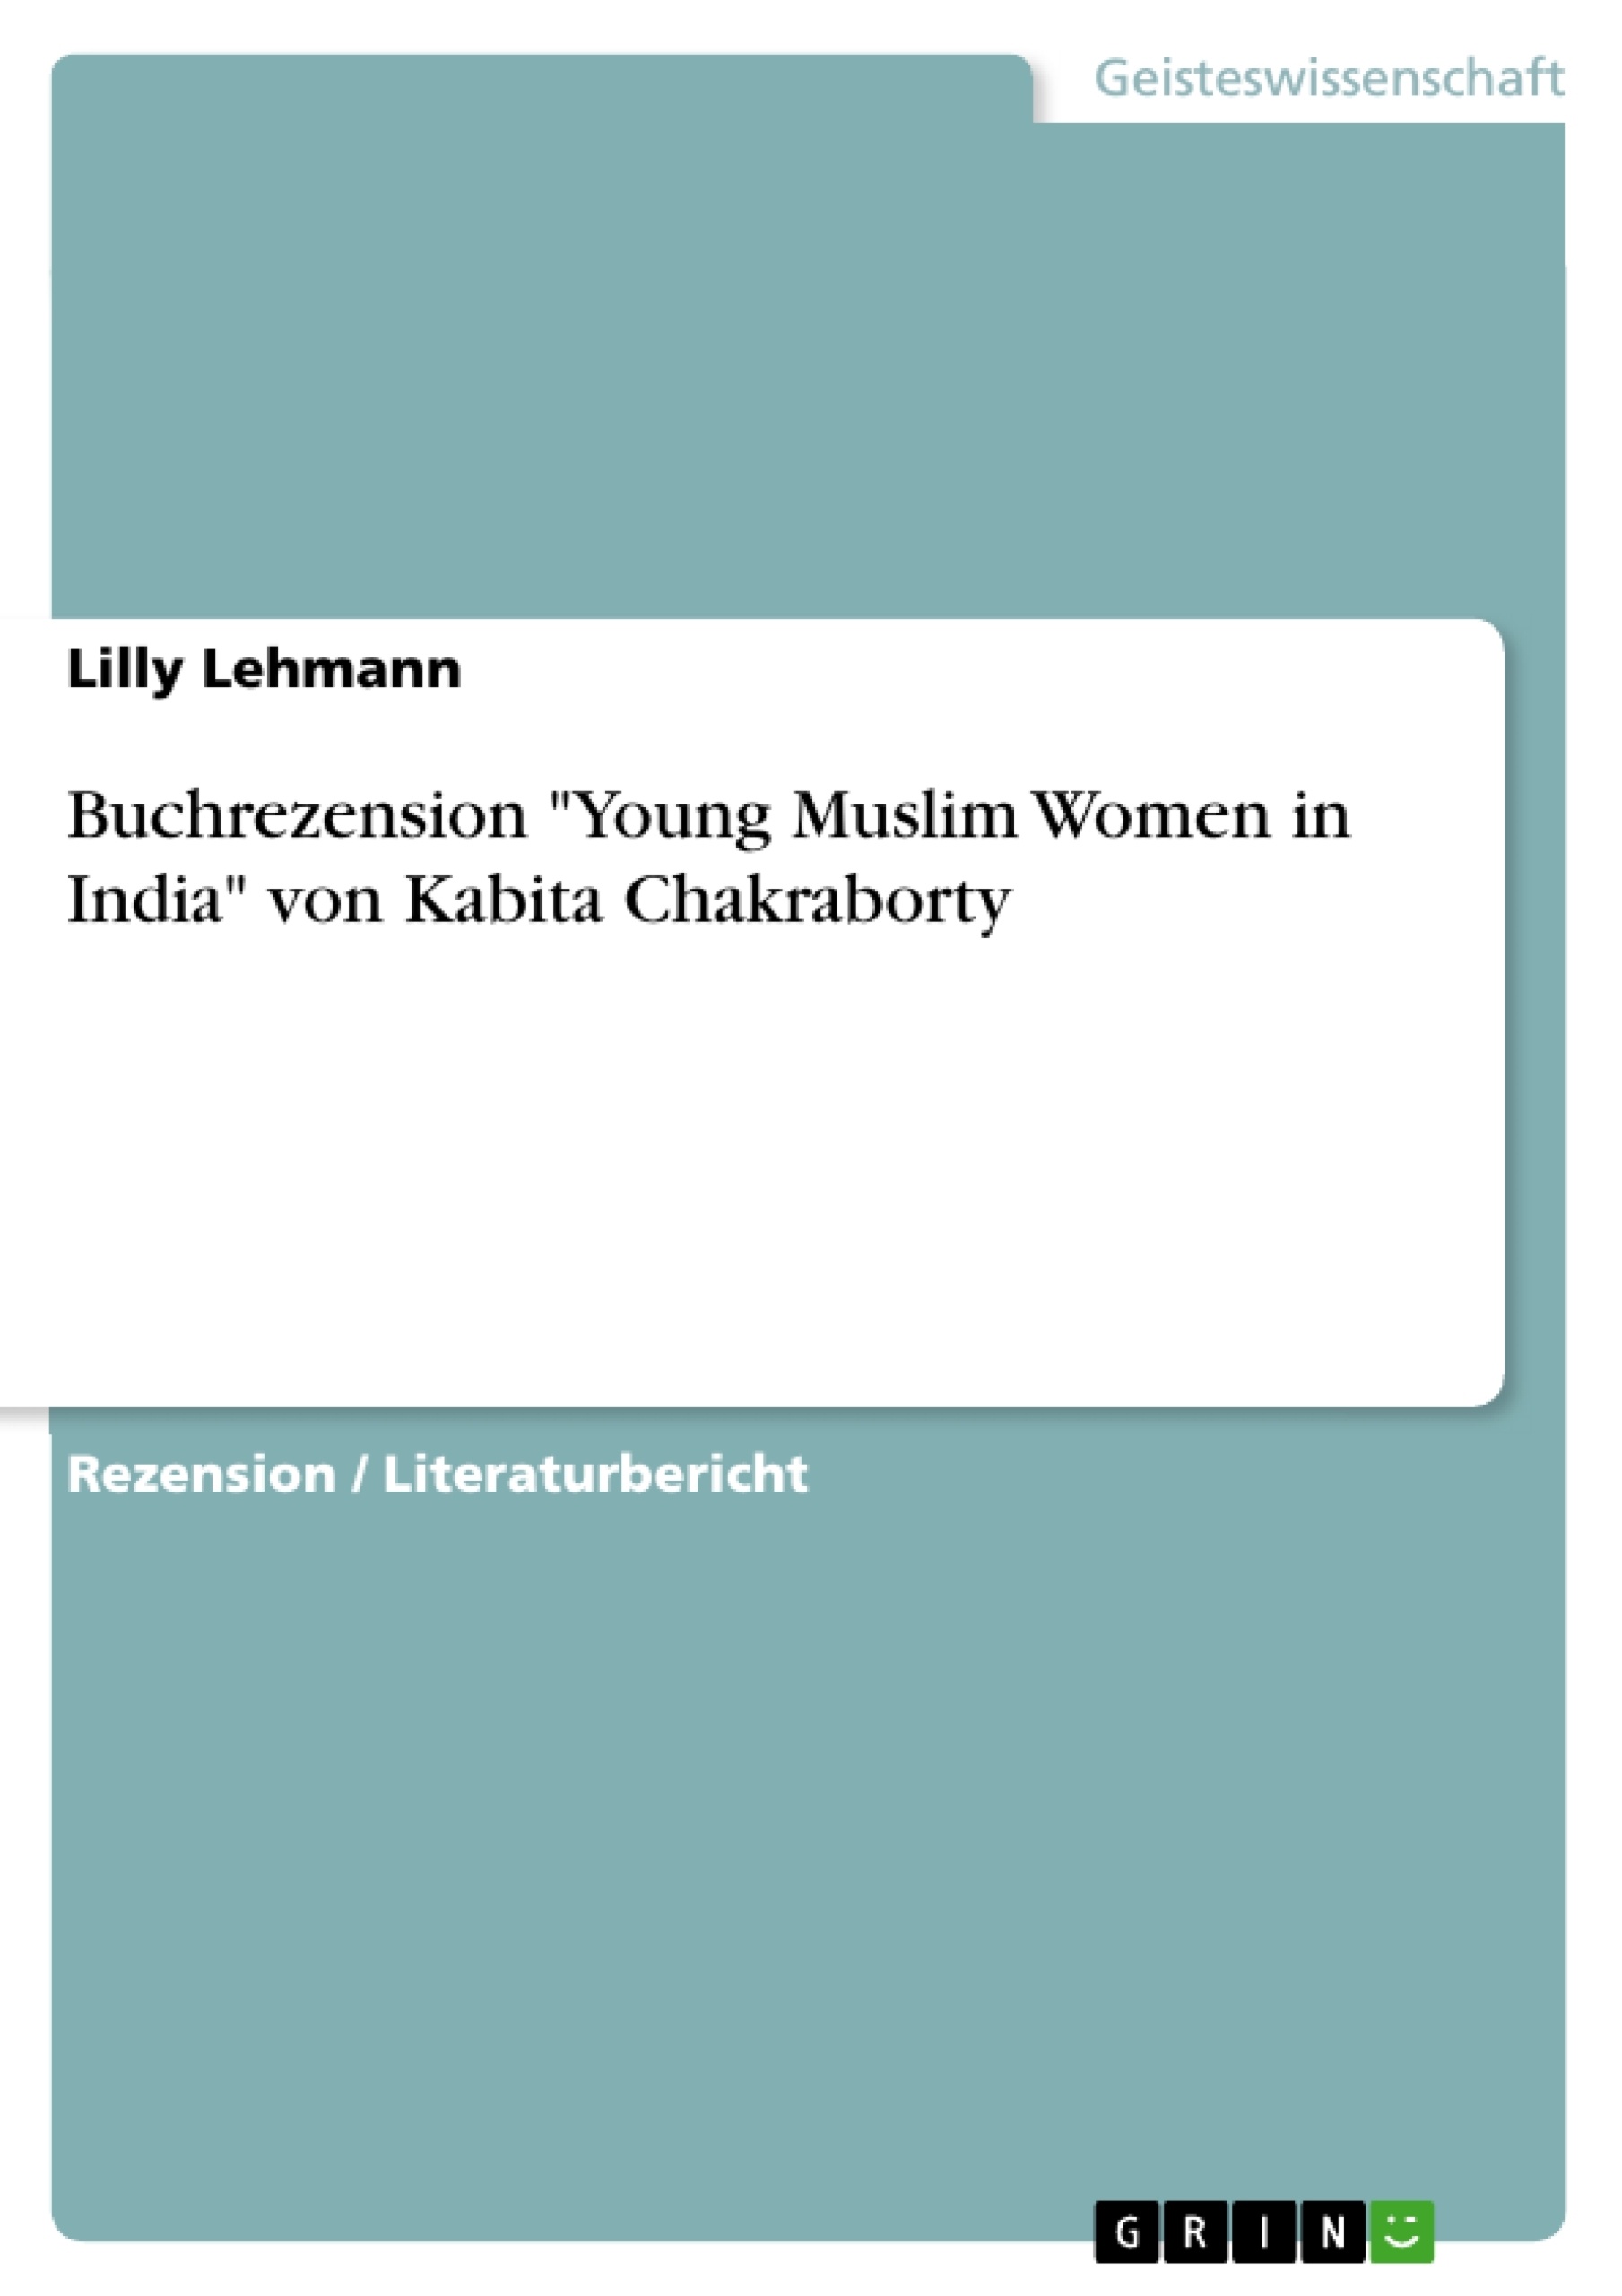 Título: Buchrezension "Young Muslim Women in India" von Kabita Chakraborty